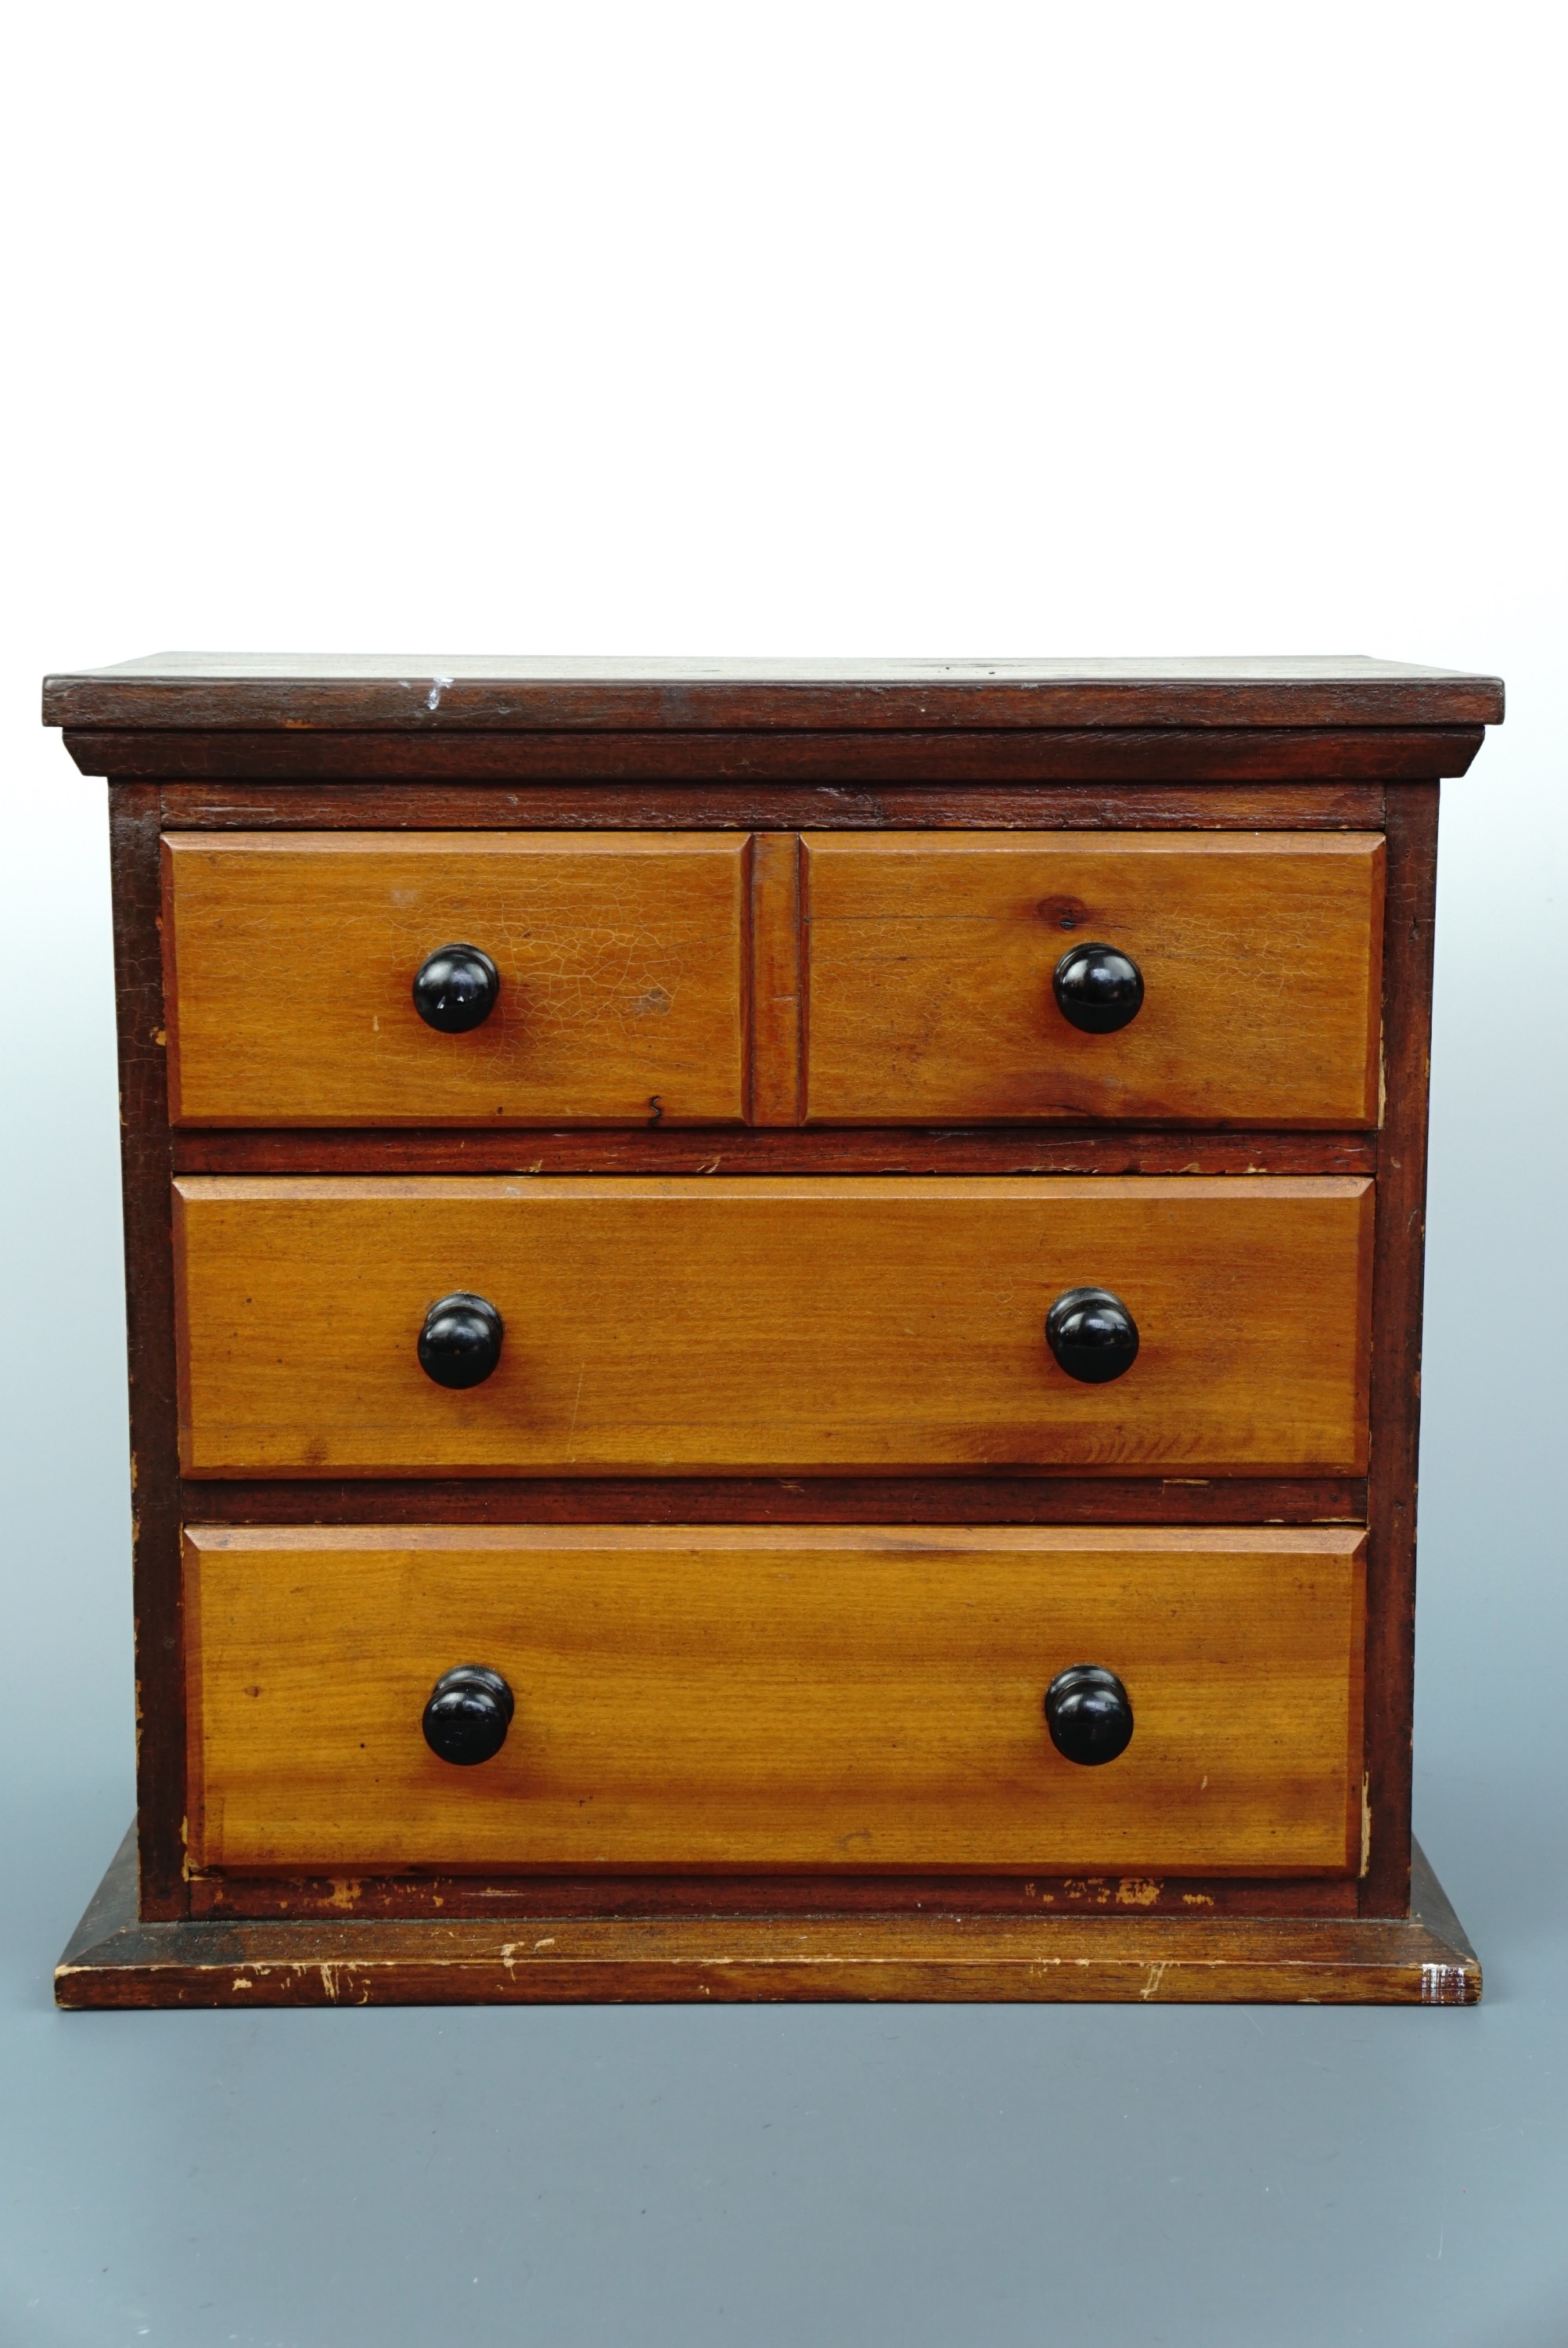 A Victorian miniature pine chest of drawers, 33 cm x 18 cm x 31 cm high